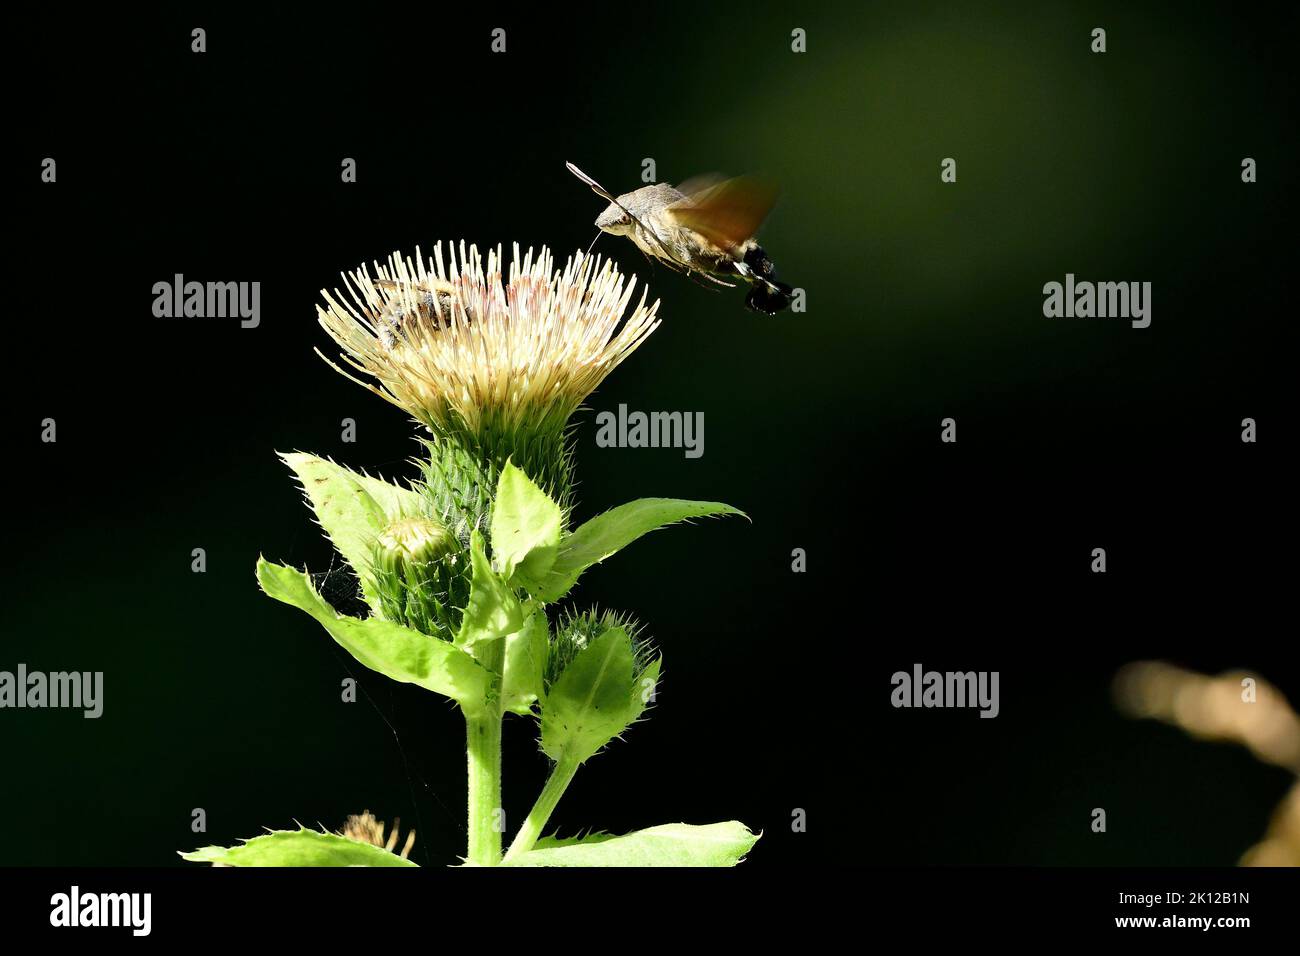 Hummingbird Hawk-moth, Macroglossum stellatarum, Sphingidae, hovering, nettare che succhia, Falce, insetto, animale, su cardo di cavolo, Cirsium oleraceum, AS Foto Stock